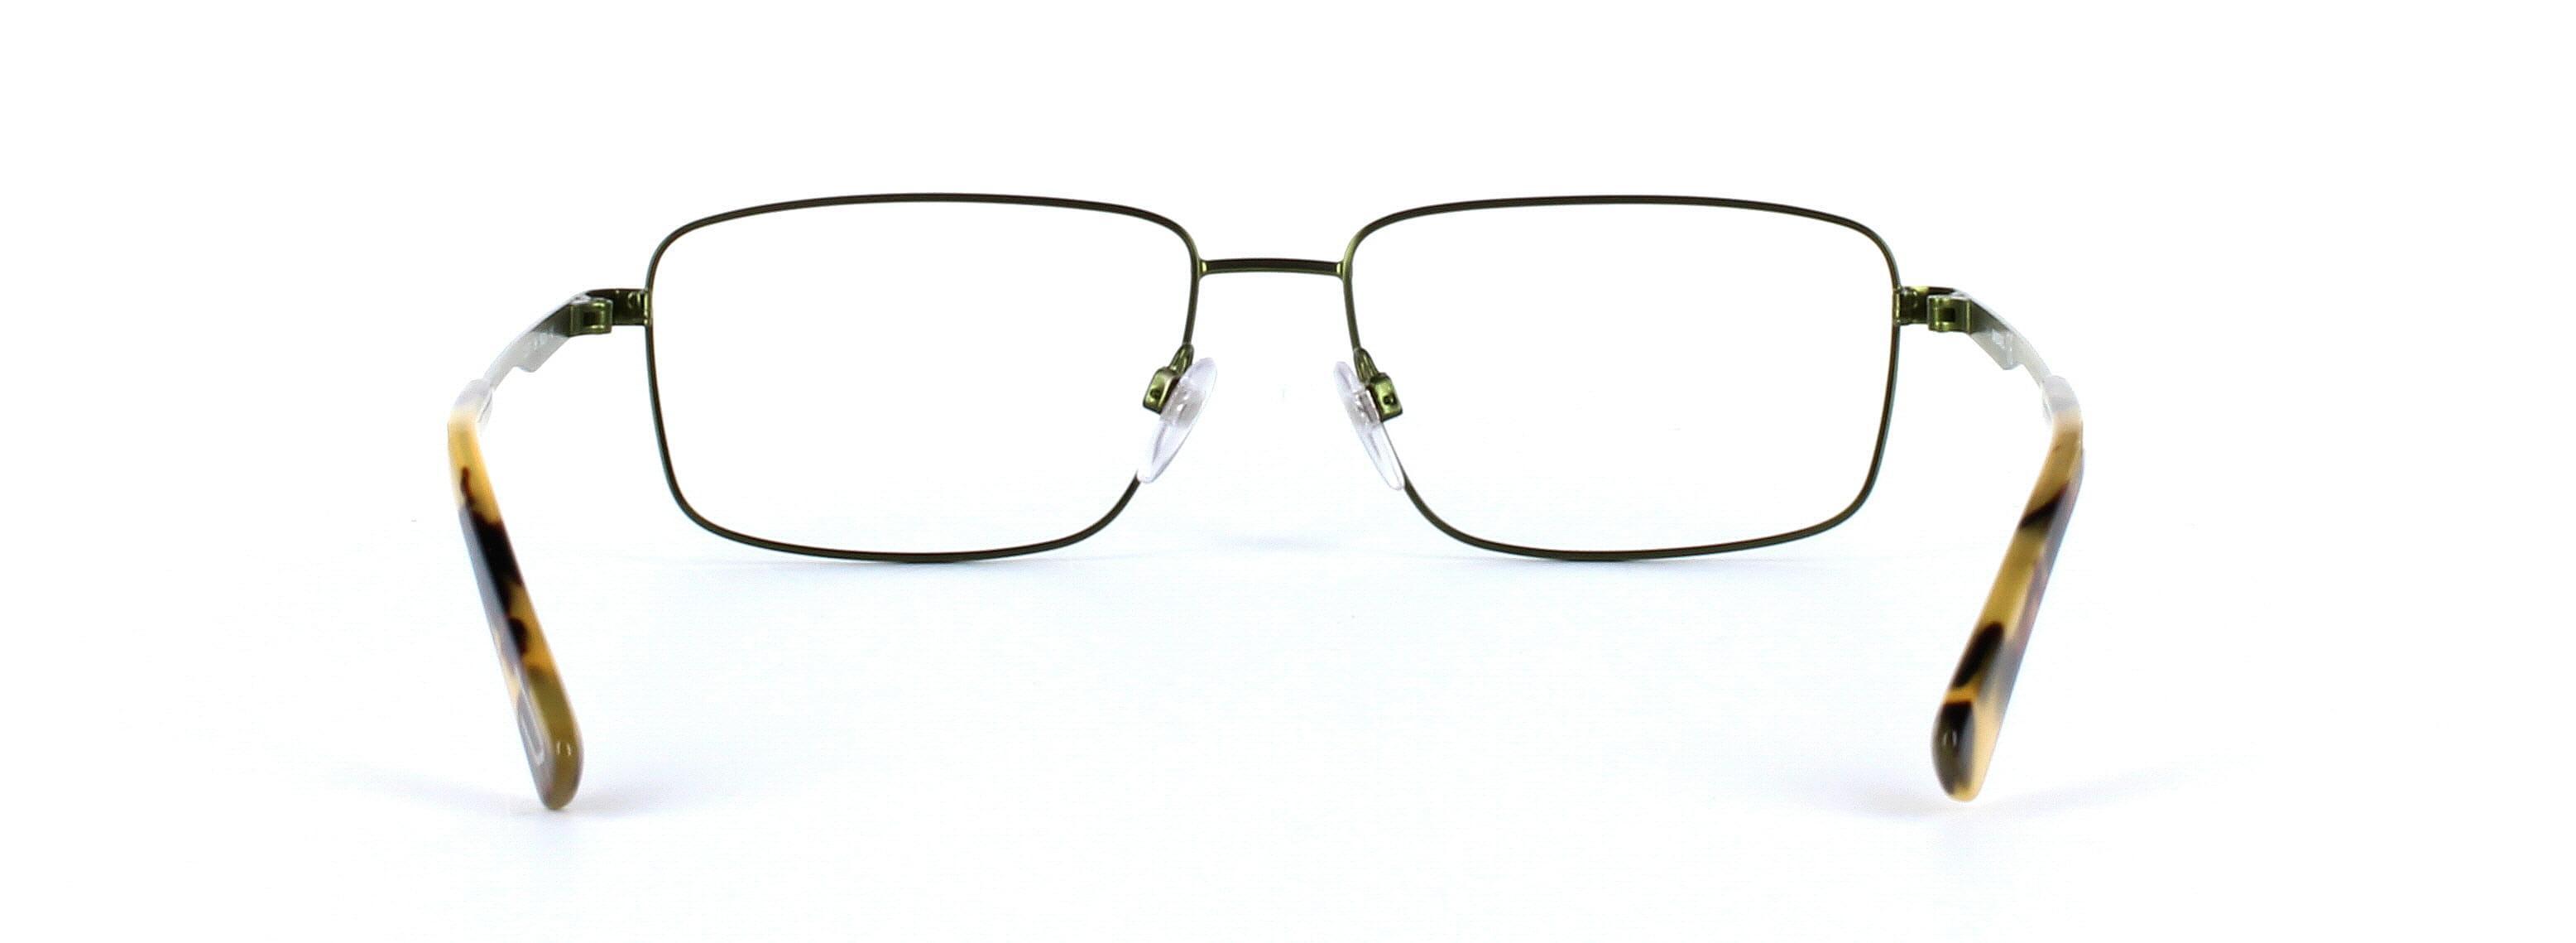 Diesel (DL5375-096) Olive Green Full Rim Rectangular Metal Glasses - Image View 3